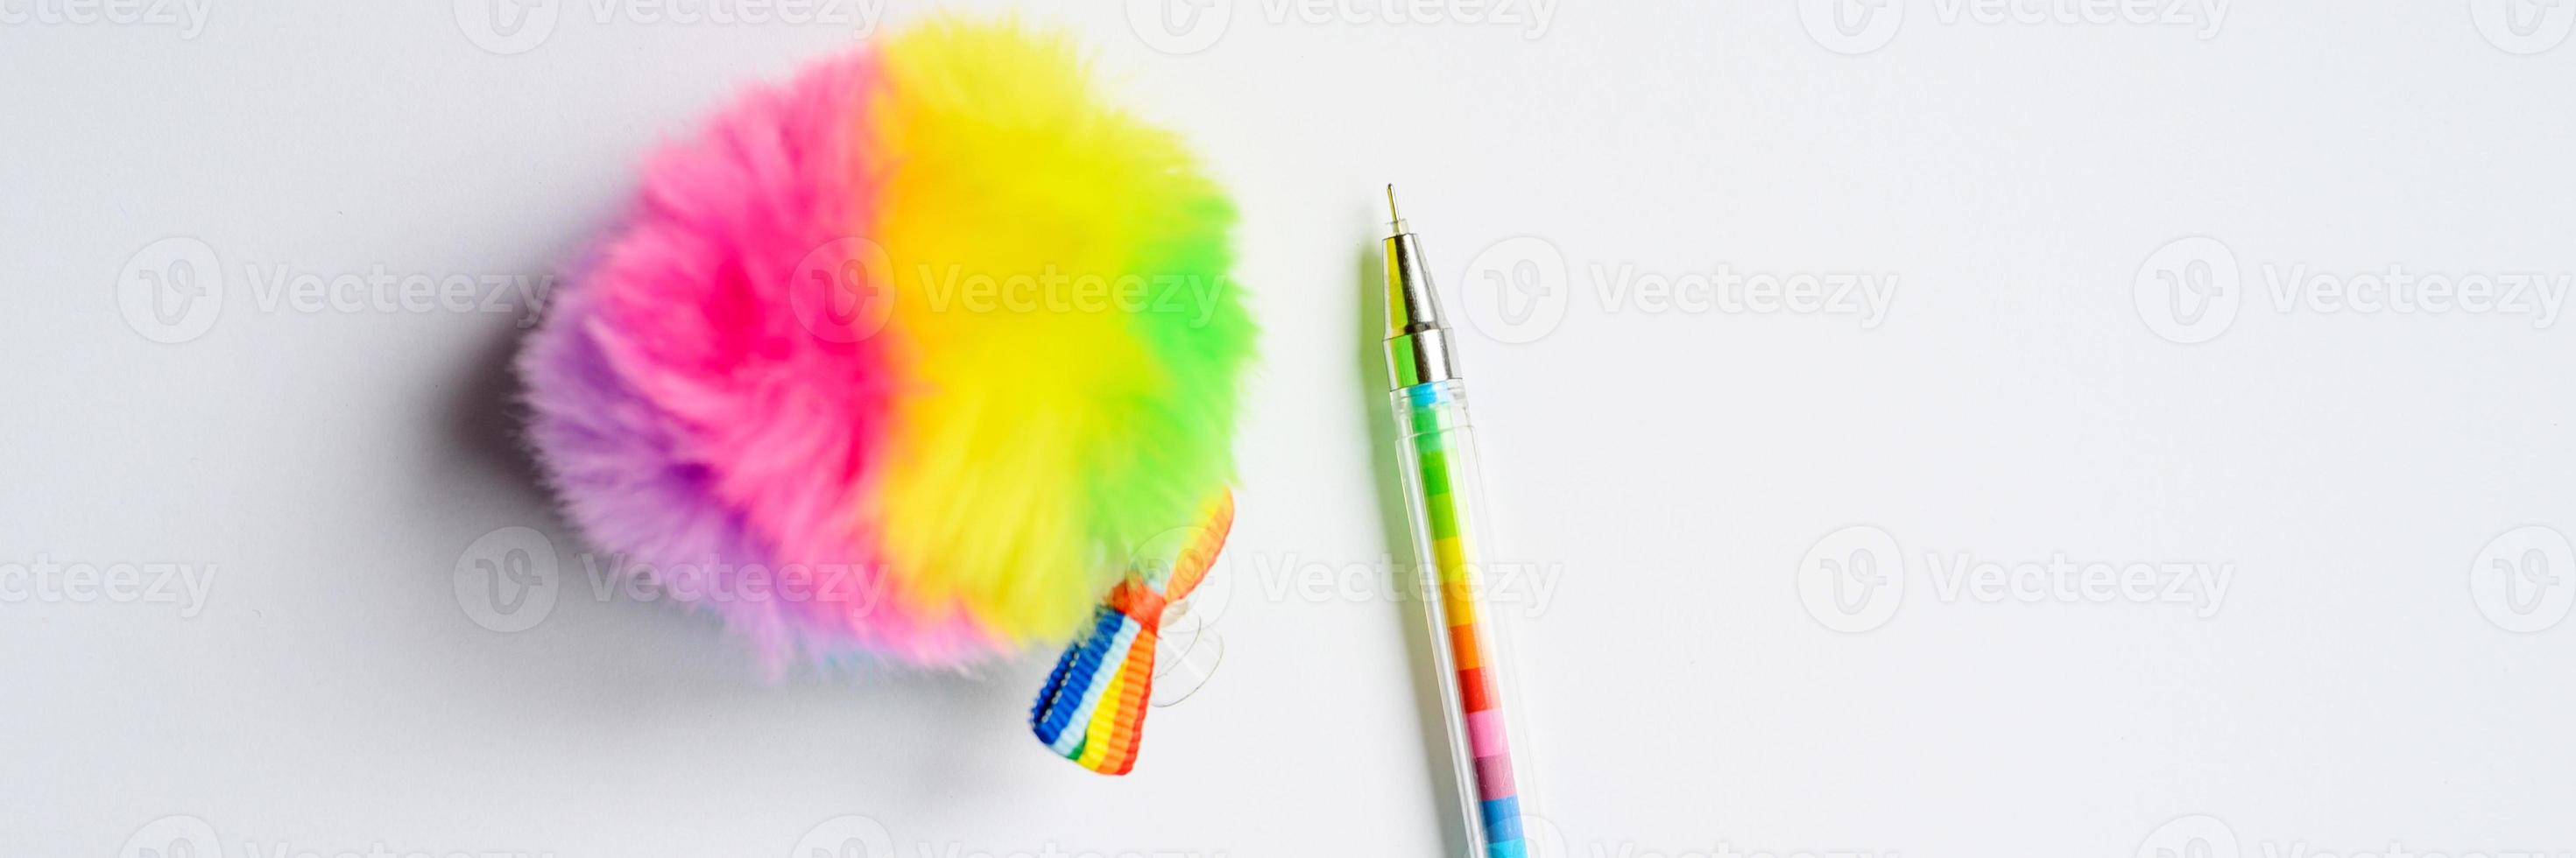 Multi-colored pen on white background photo